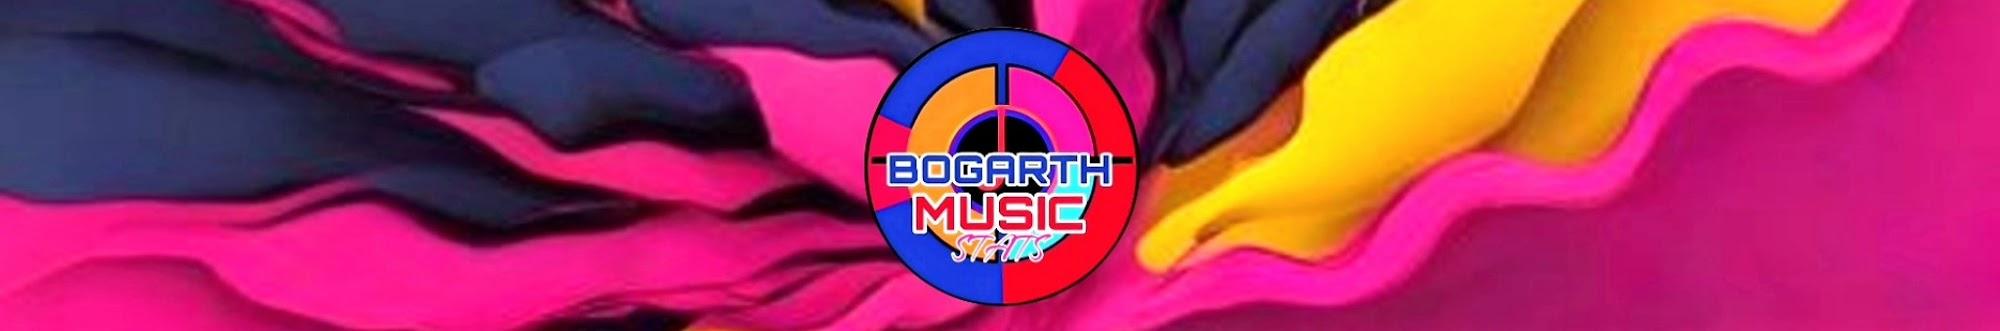 Bogarth' Music Stats